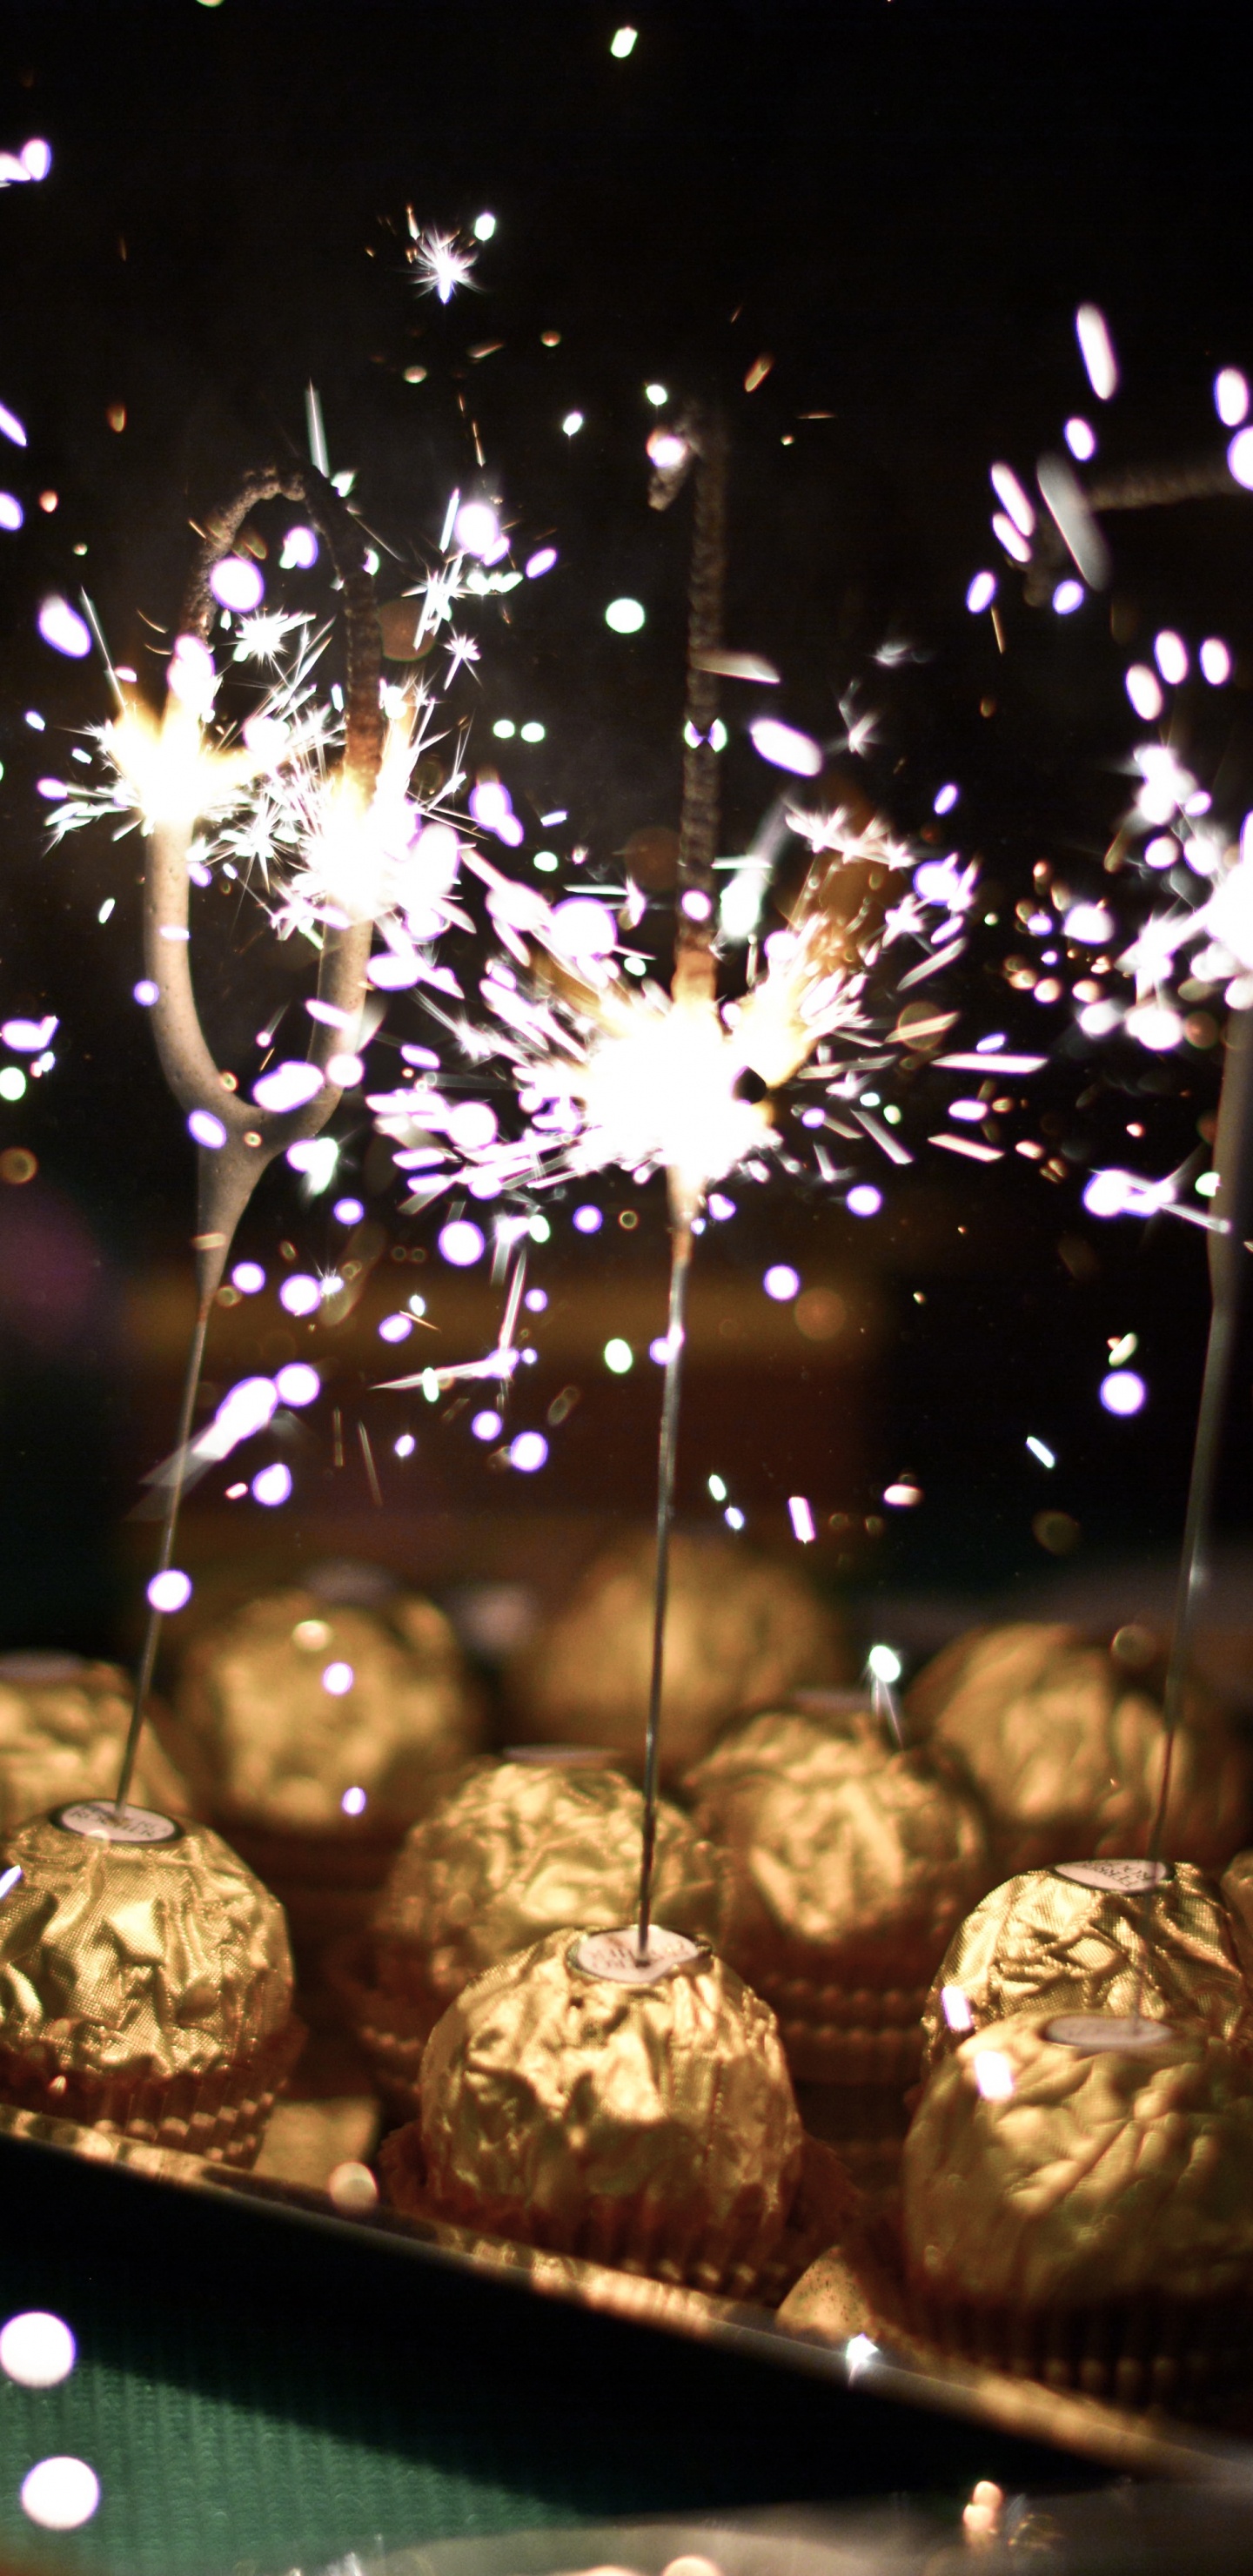 Chocolate Balls, Candy, Chocolate, Fireworks, Sparkler. Wallpaper in 1440x2960 Resolution